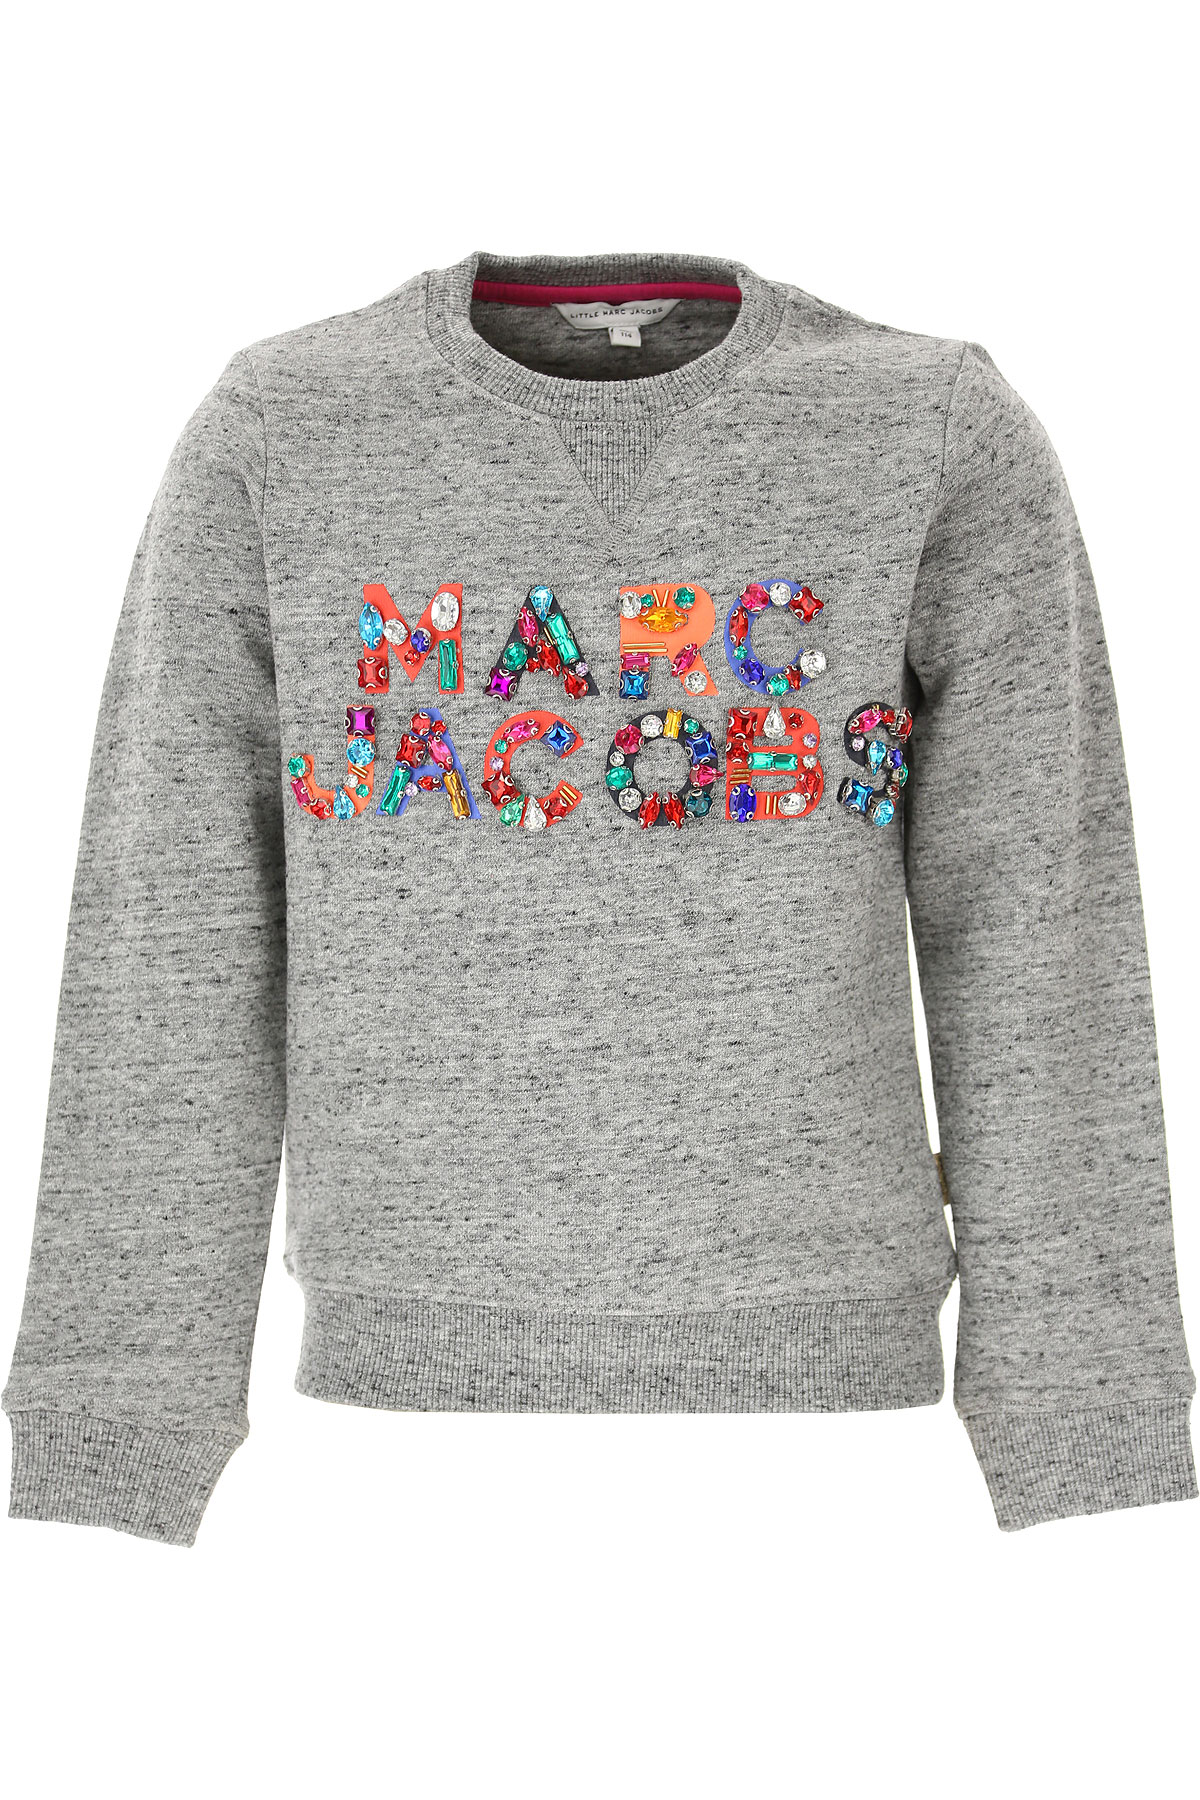 Marc Jacobs Kinder Sweatshirt & Kapuzenpullover für Mädchen Günstig im Sale, Grau, Baumwolle, 2017, 10Y 12Y 14Y 4Y 6Y 8Y